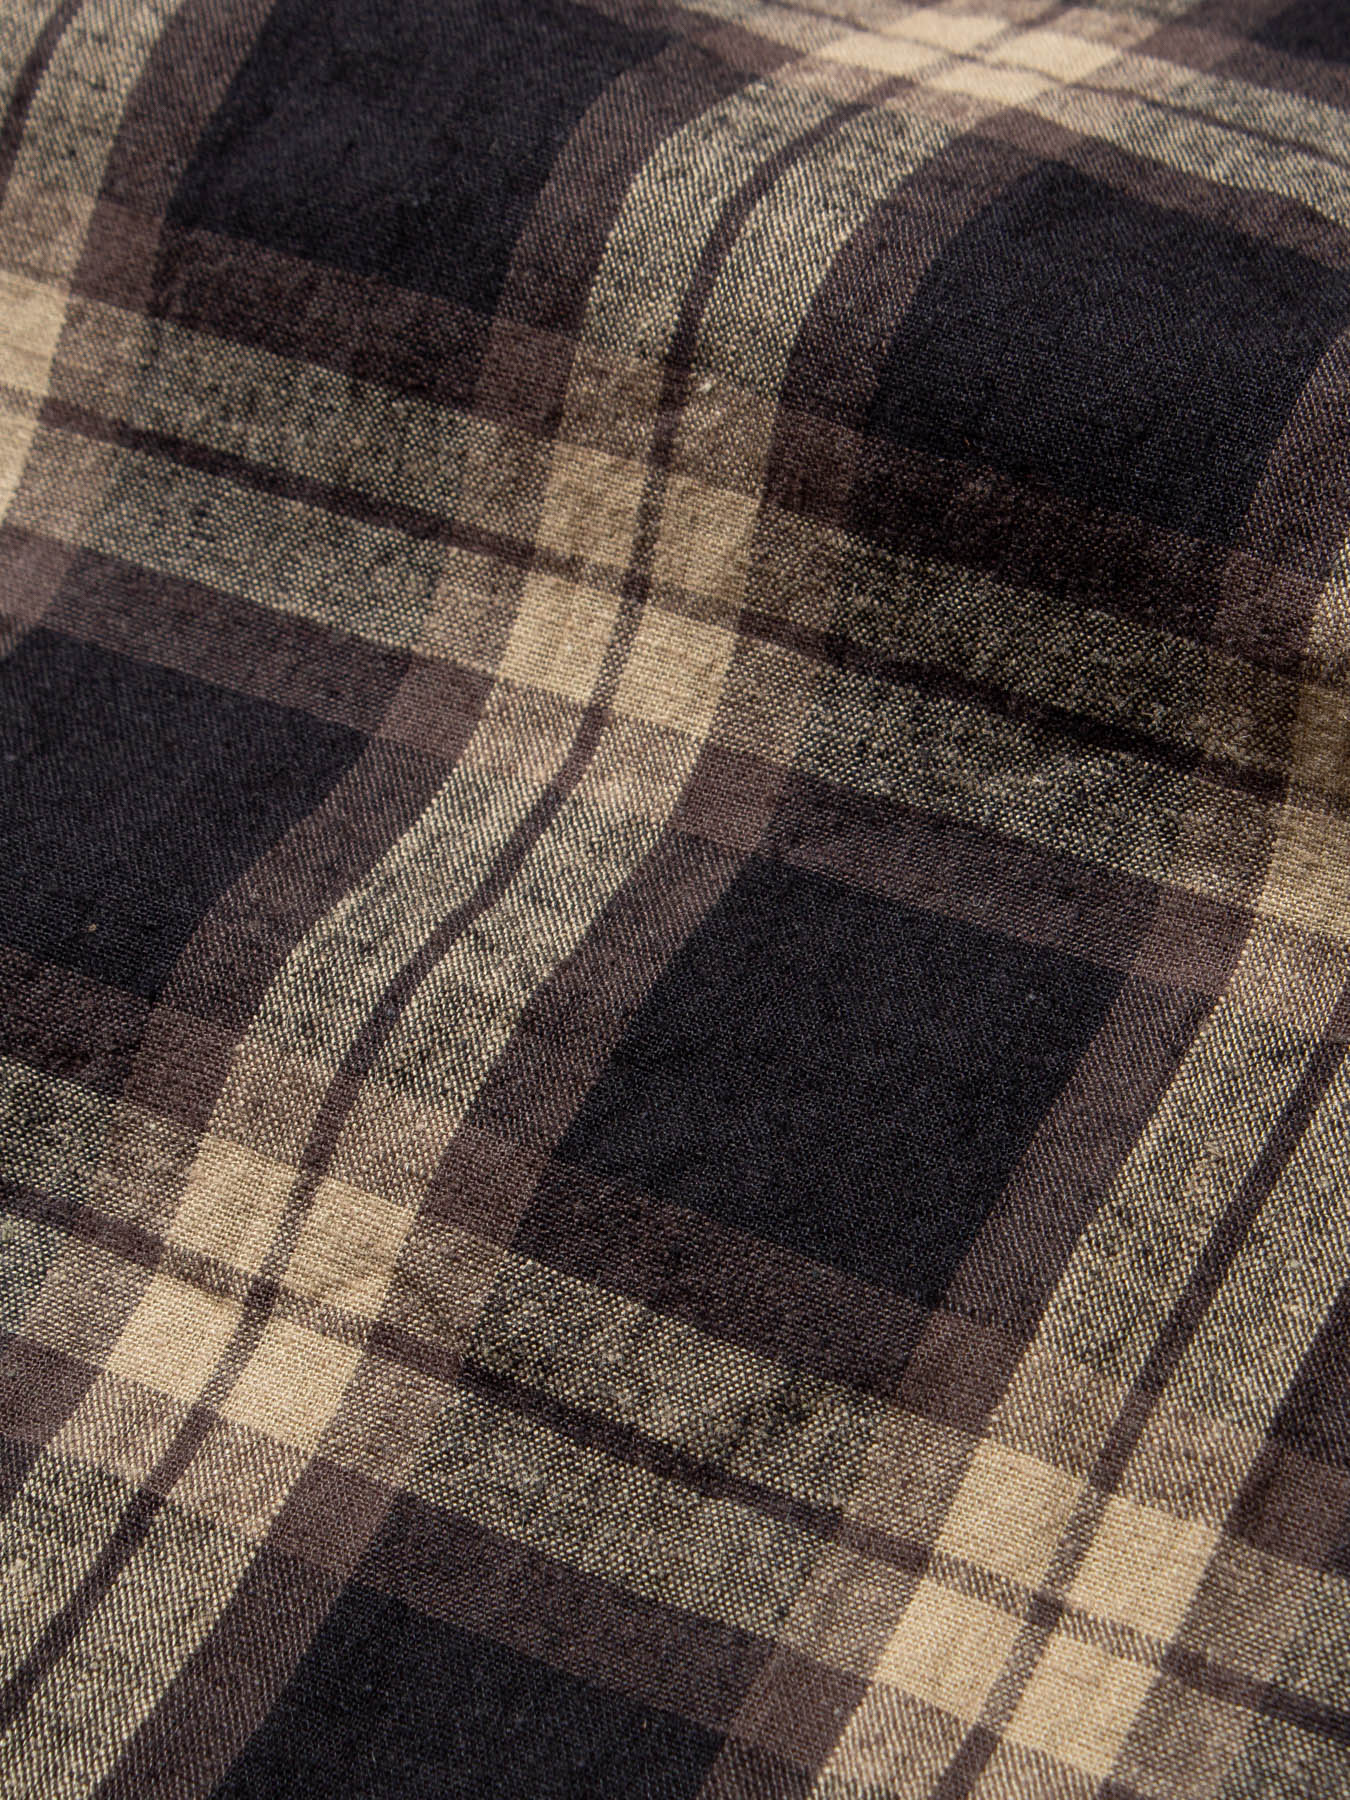 A plaid check flannel material, used to make the KESTIN Raeburn Shirt.